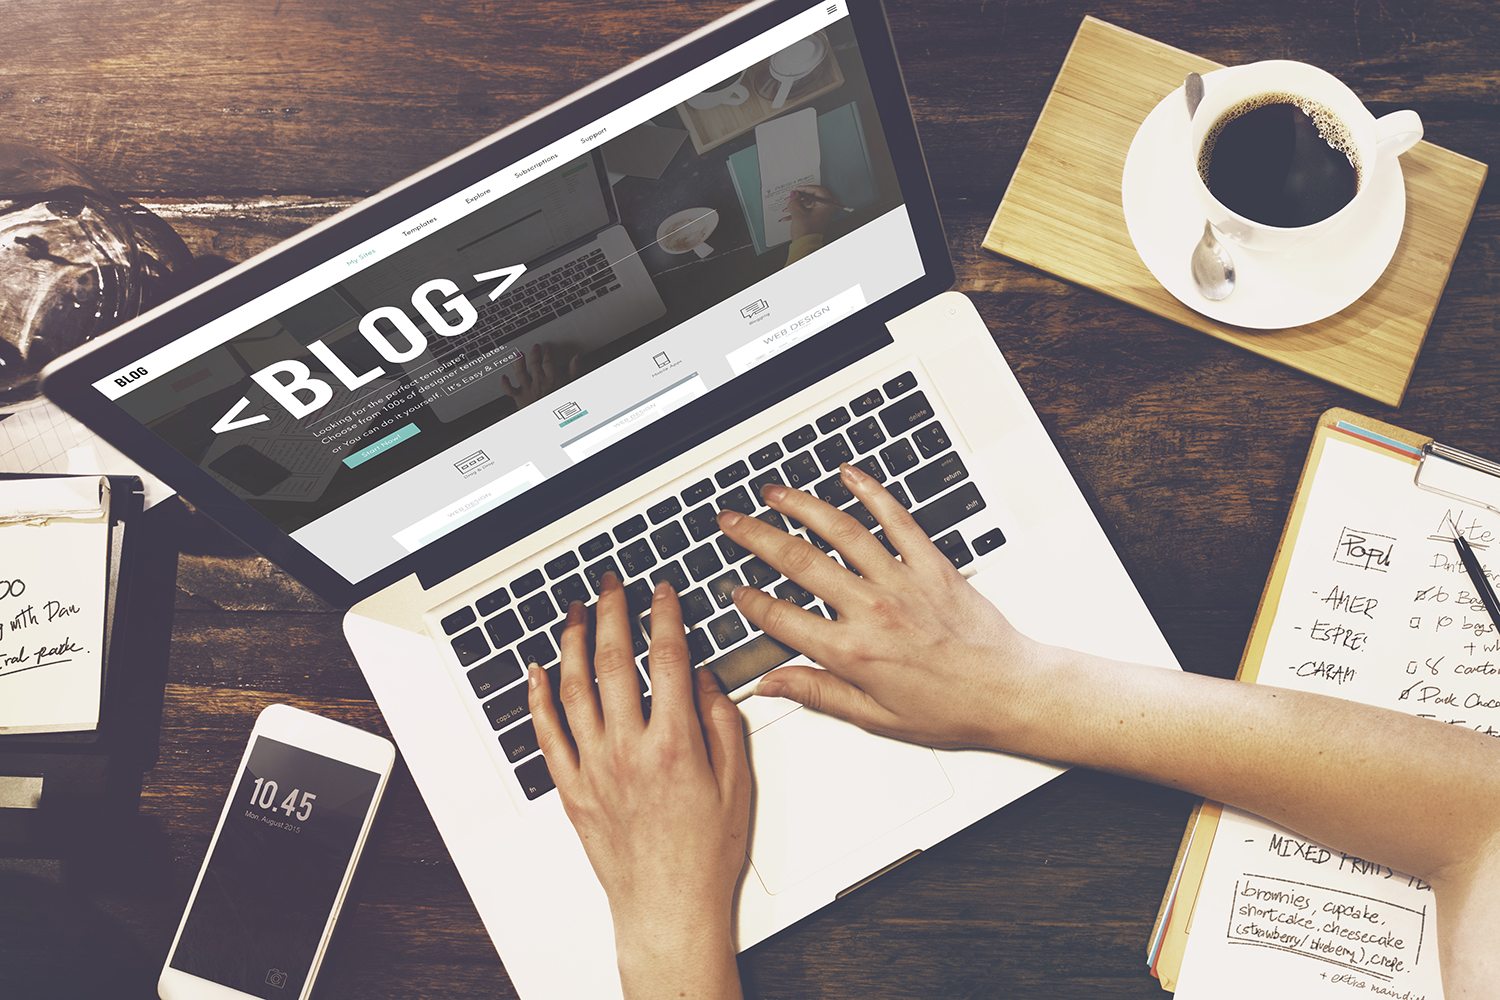 blogging benefits